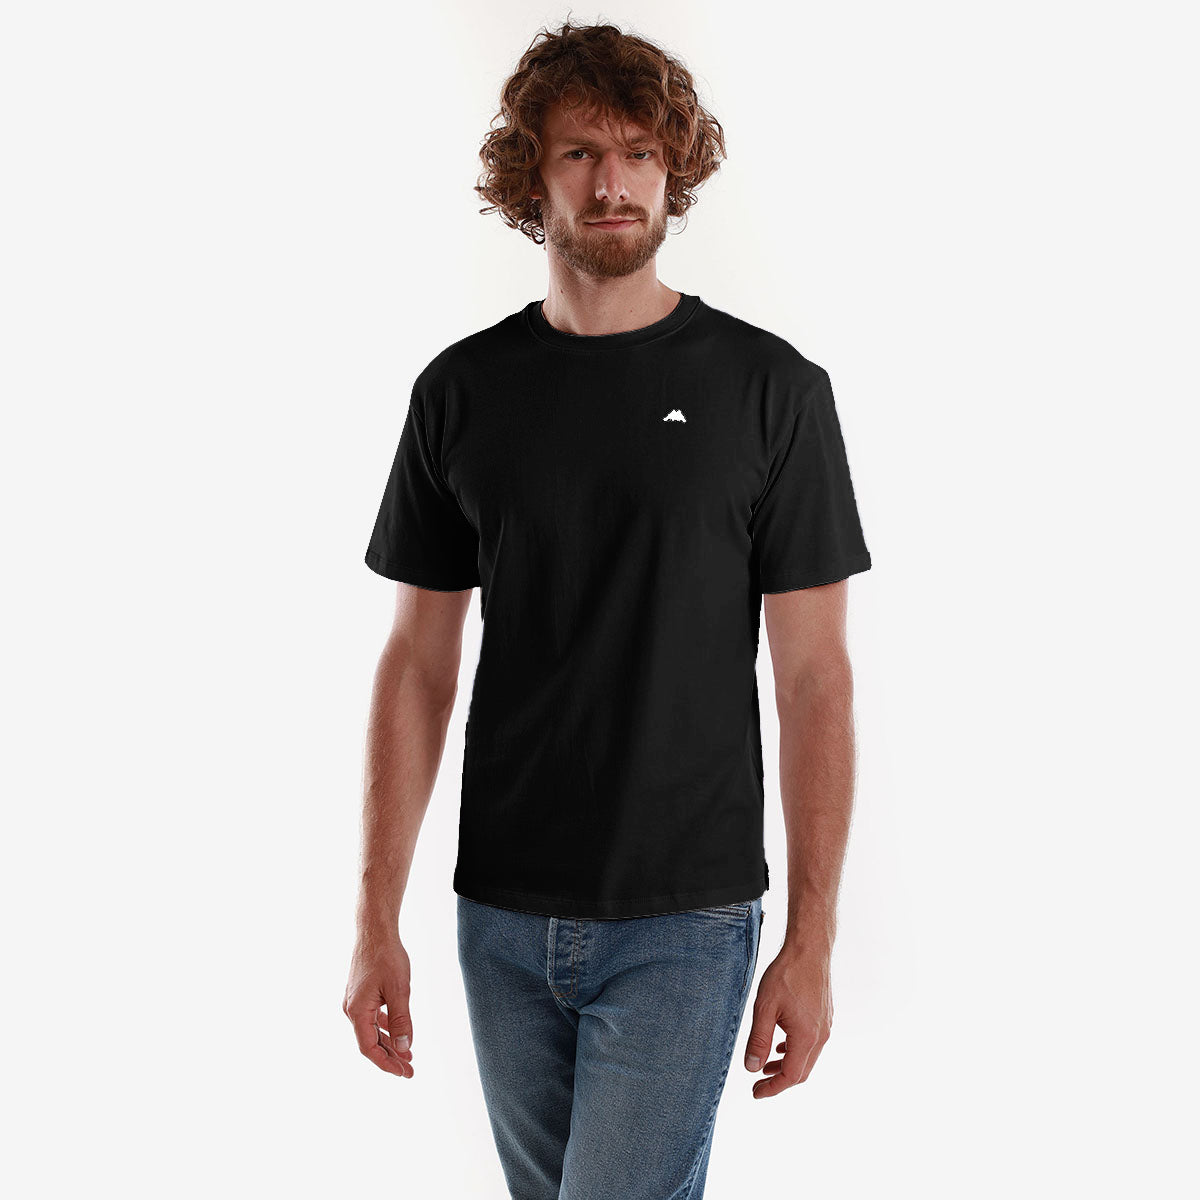 Camiseta Darphis negro unisexe - Imagen 2